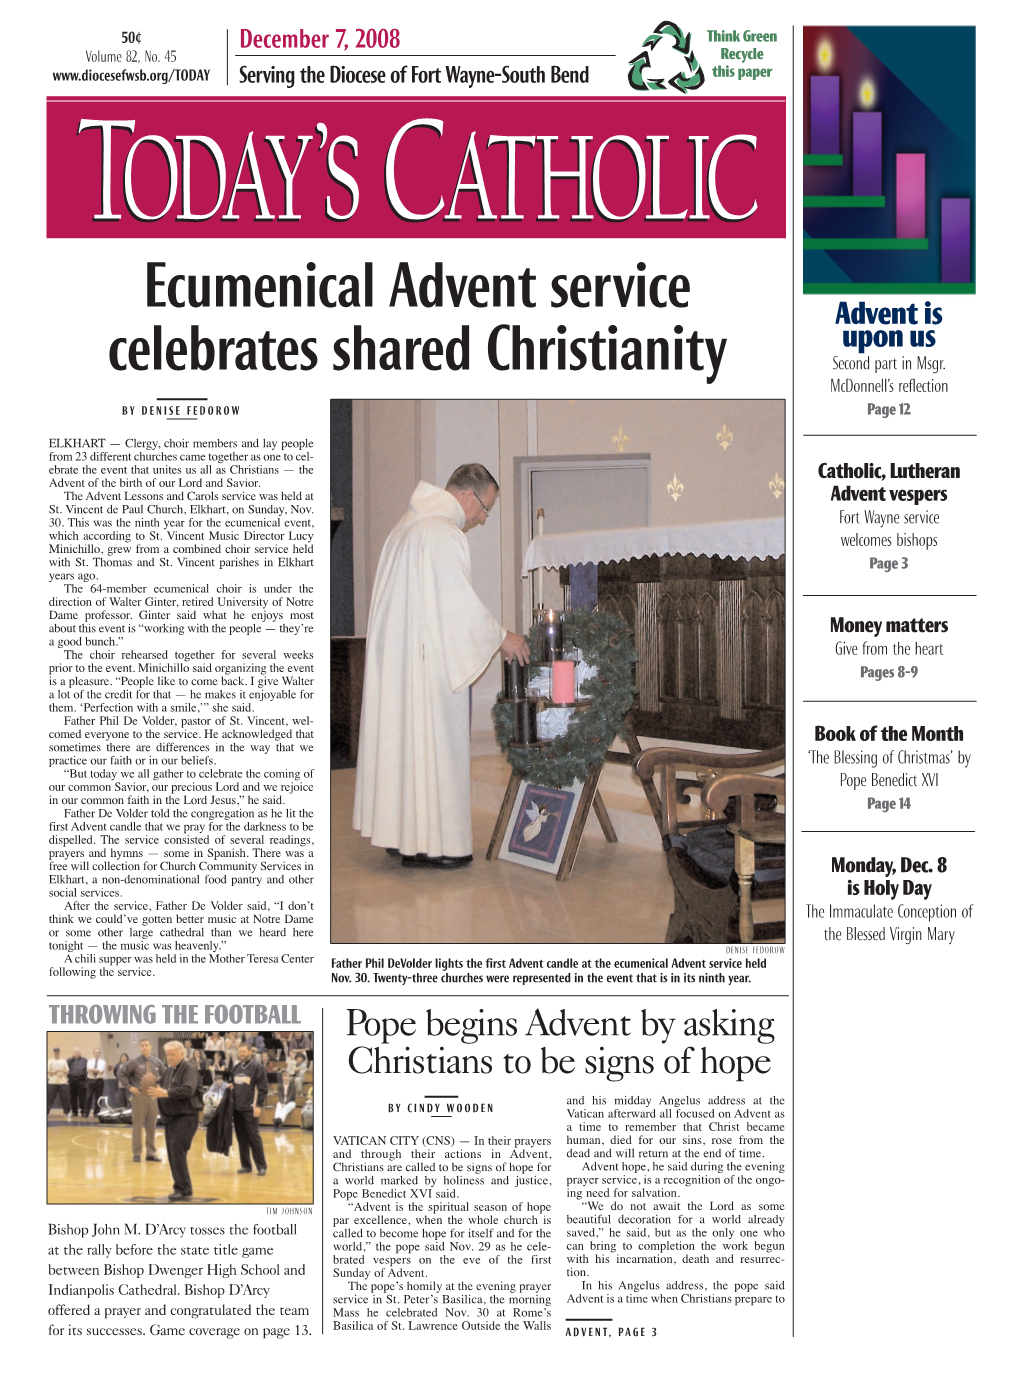 Ecumenical Advent Service Celebrates Shared Christianity